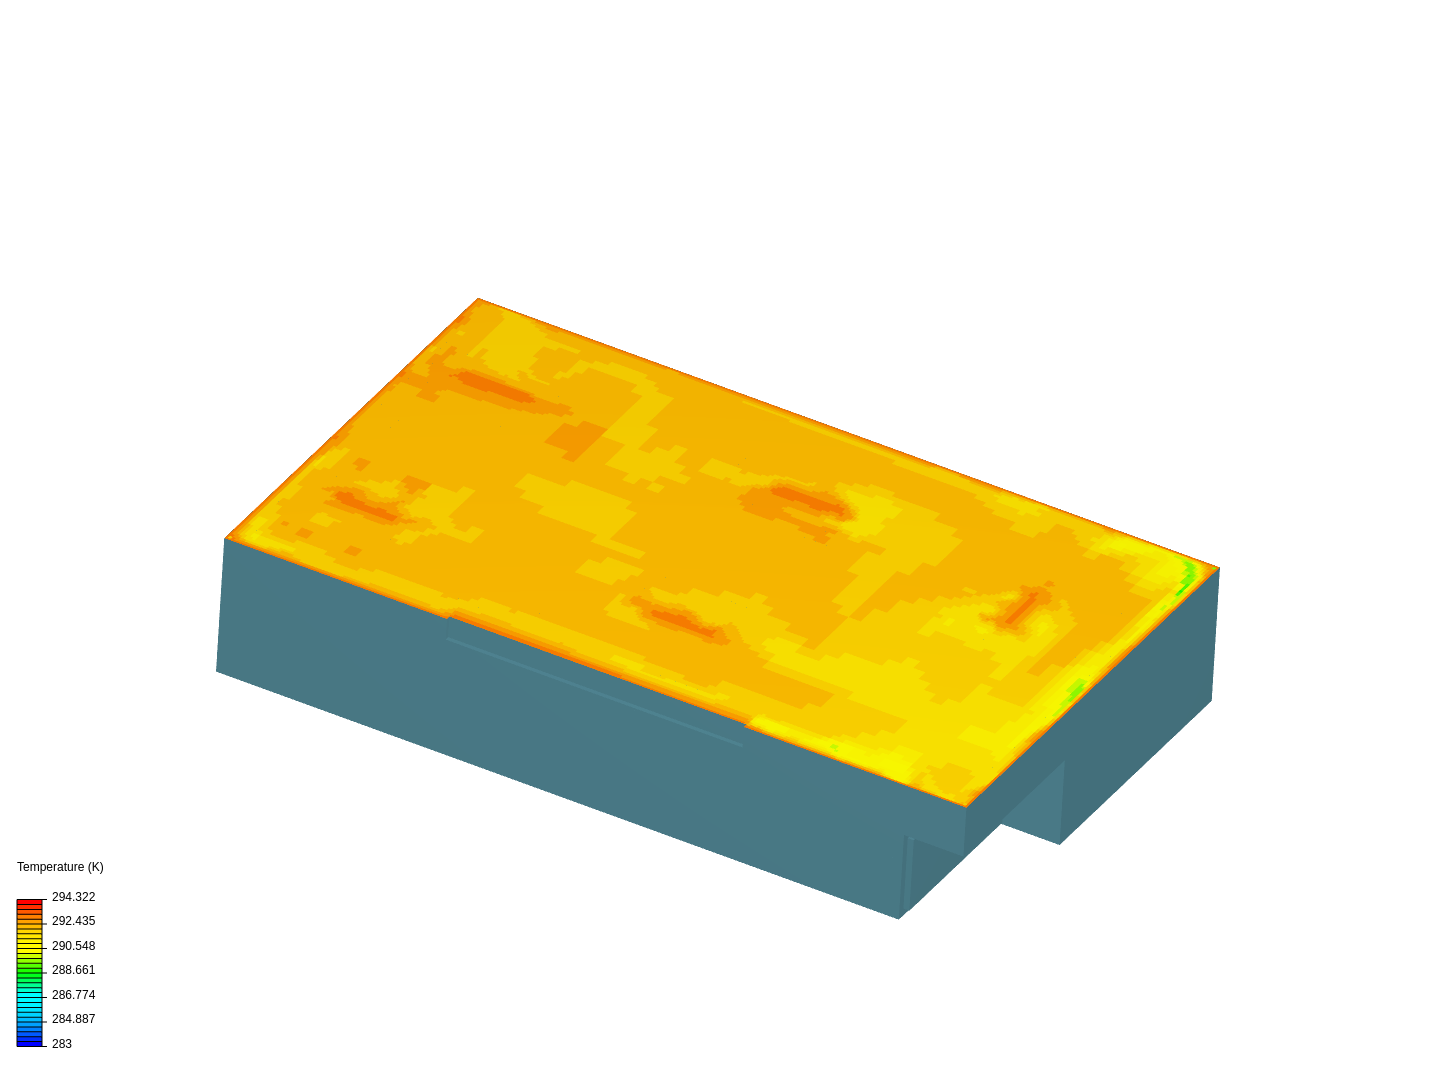 Example HVAC image